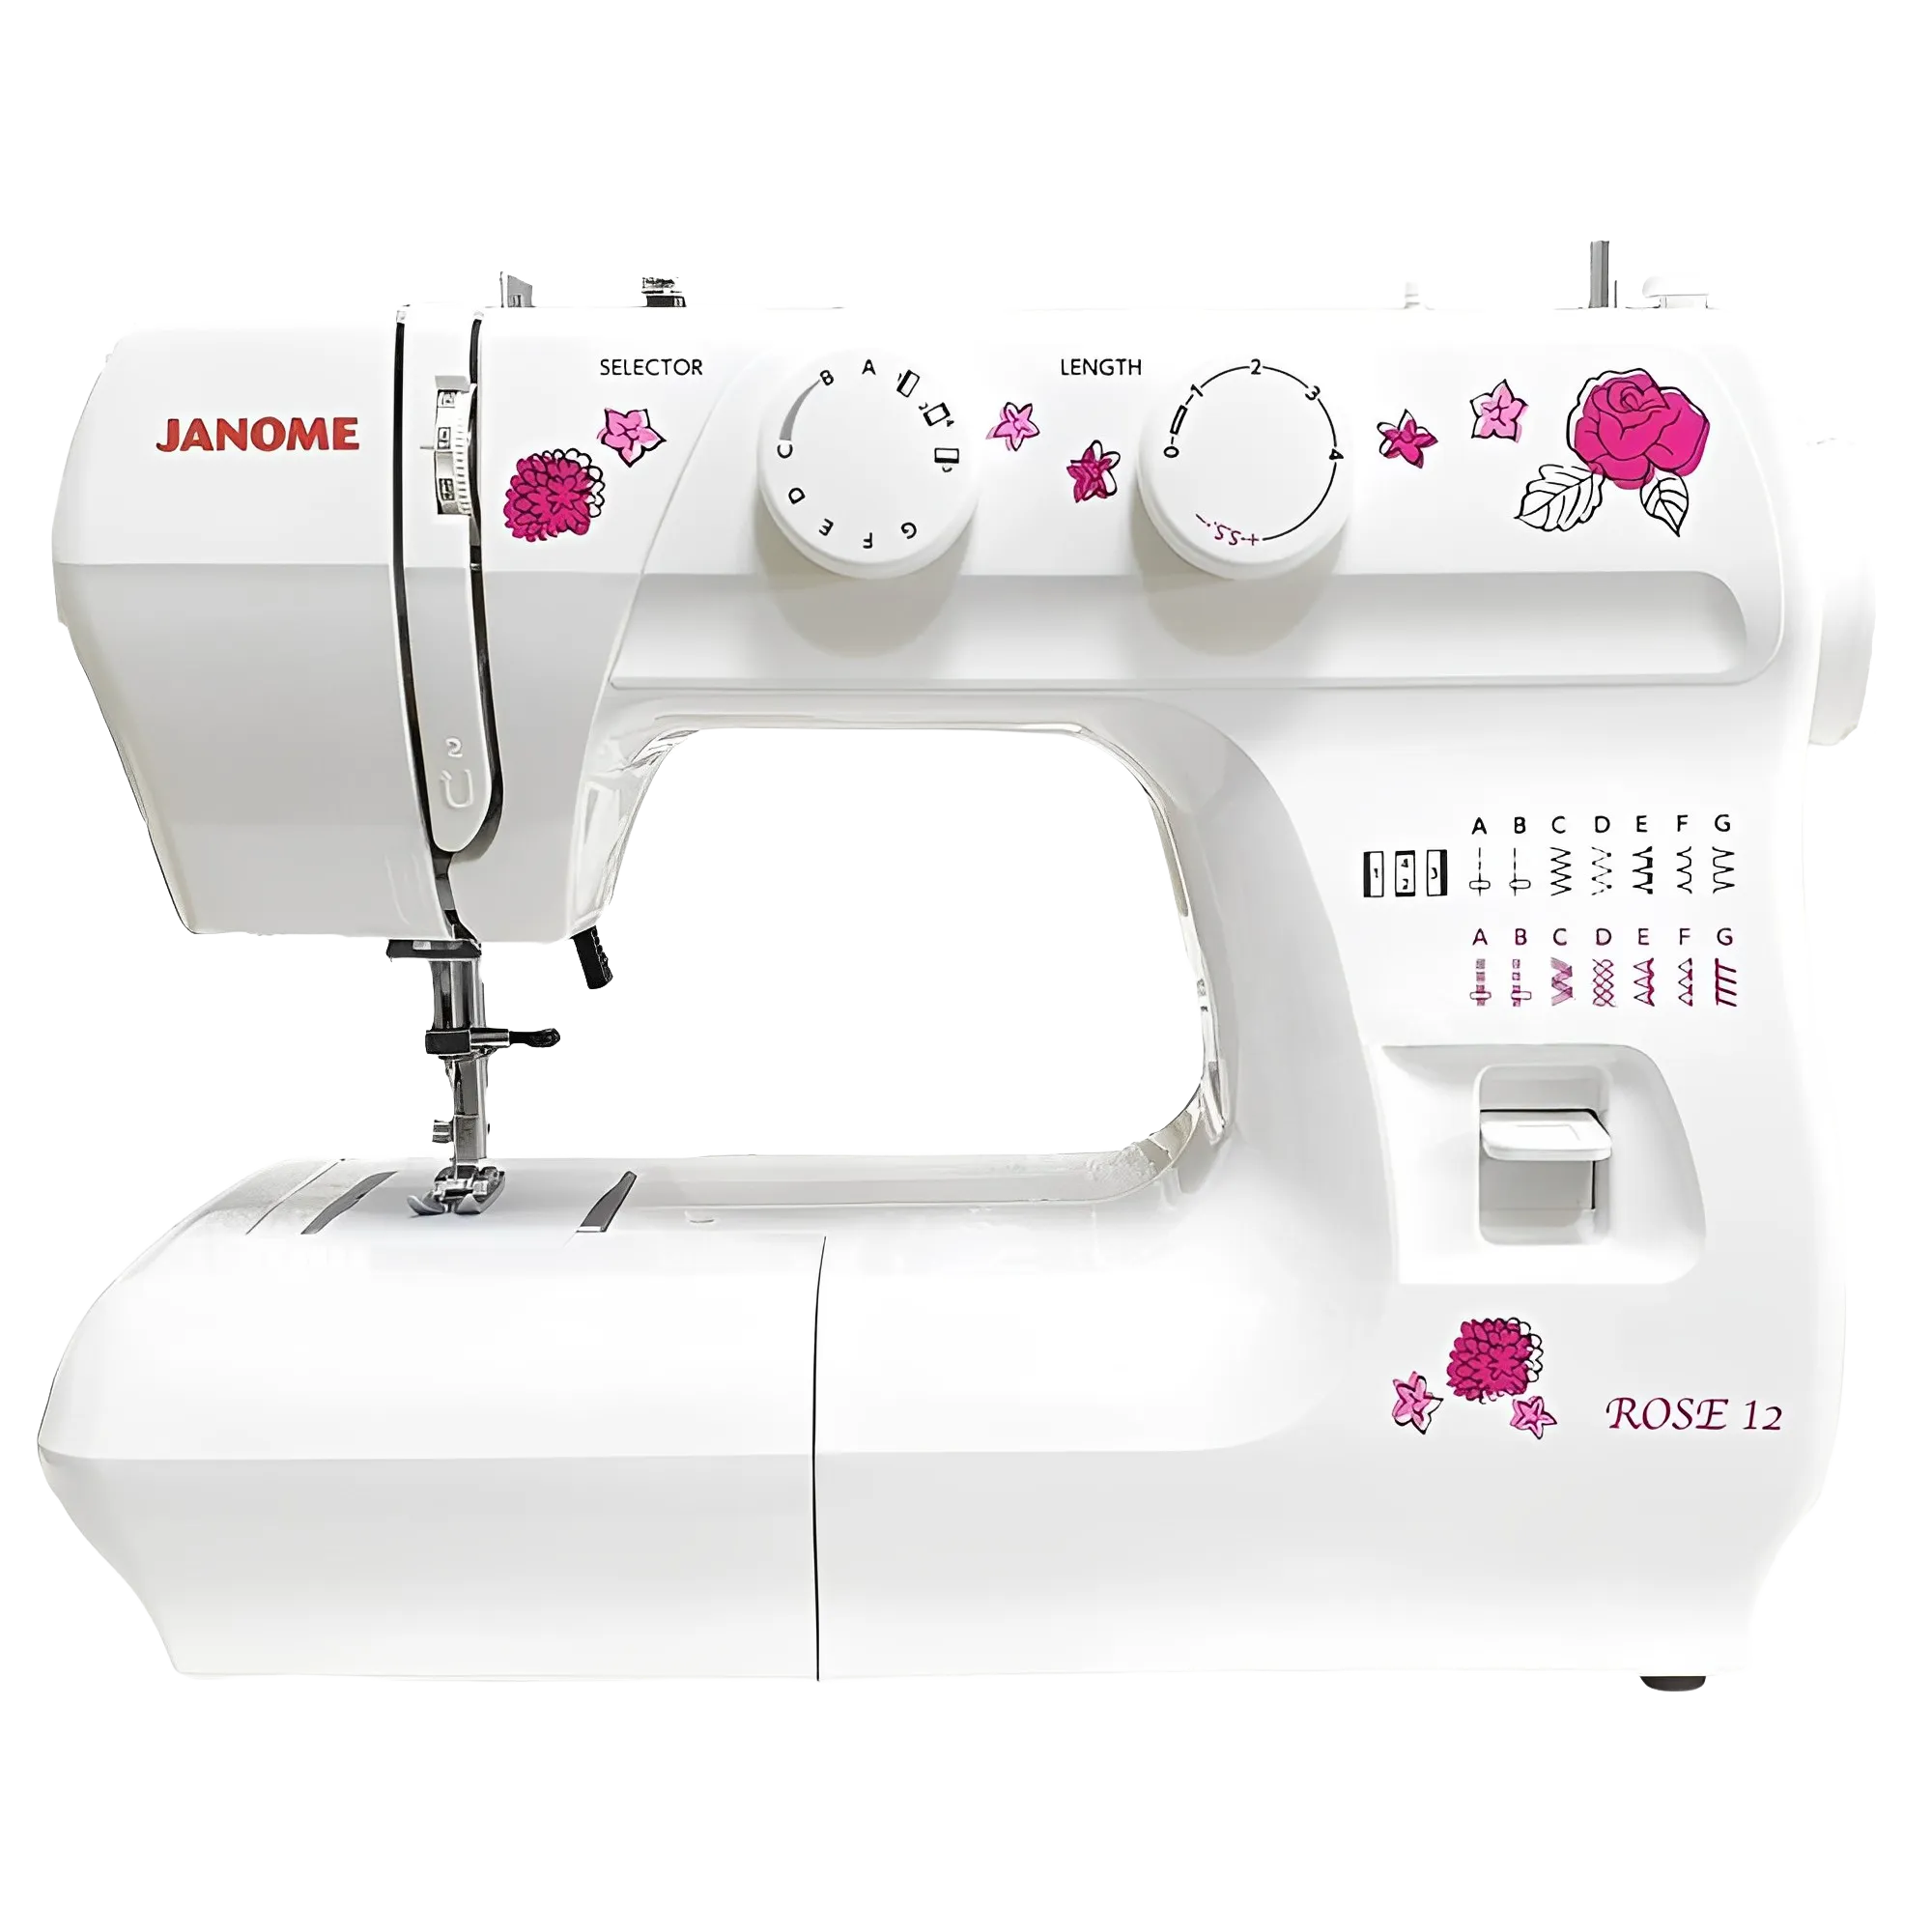 Janome Sewing Machine Rose 12